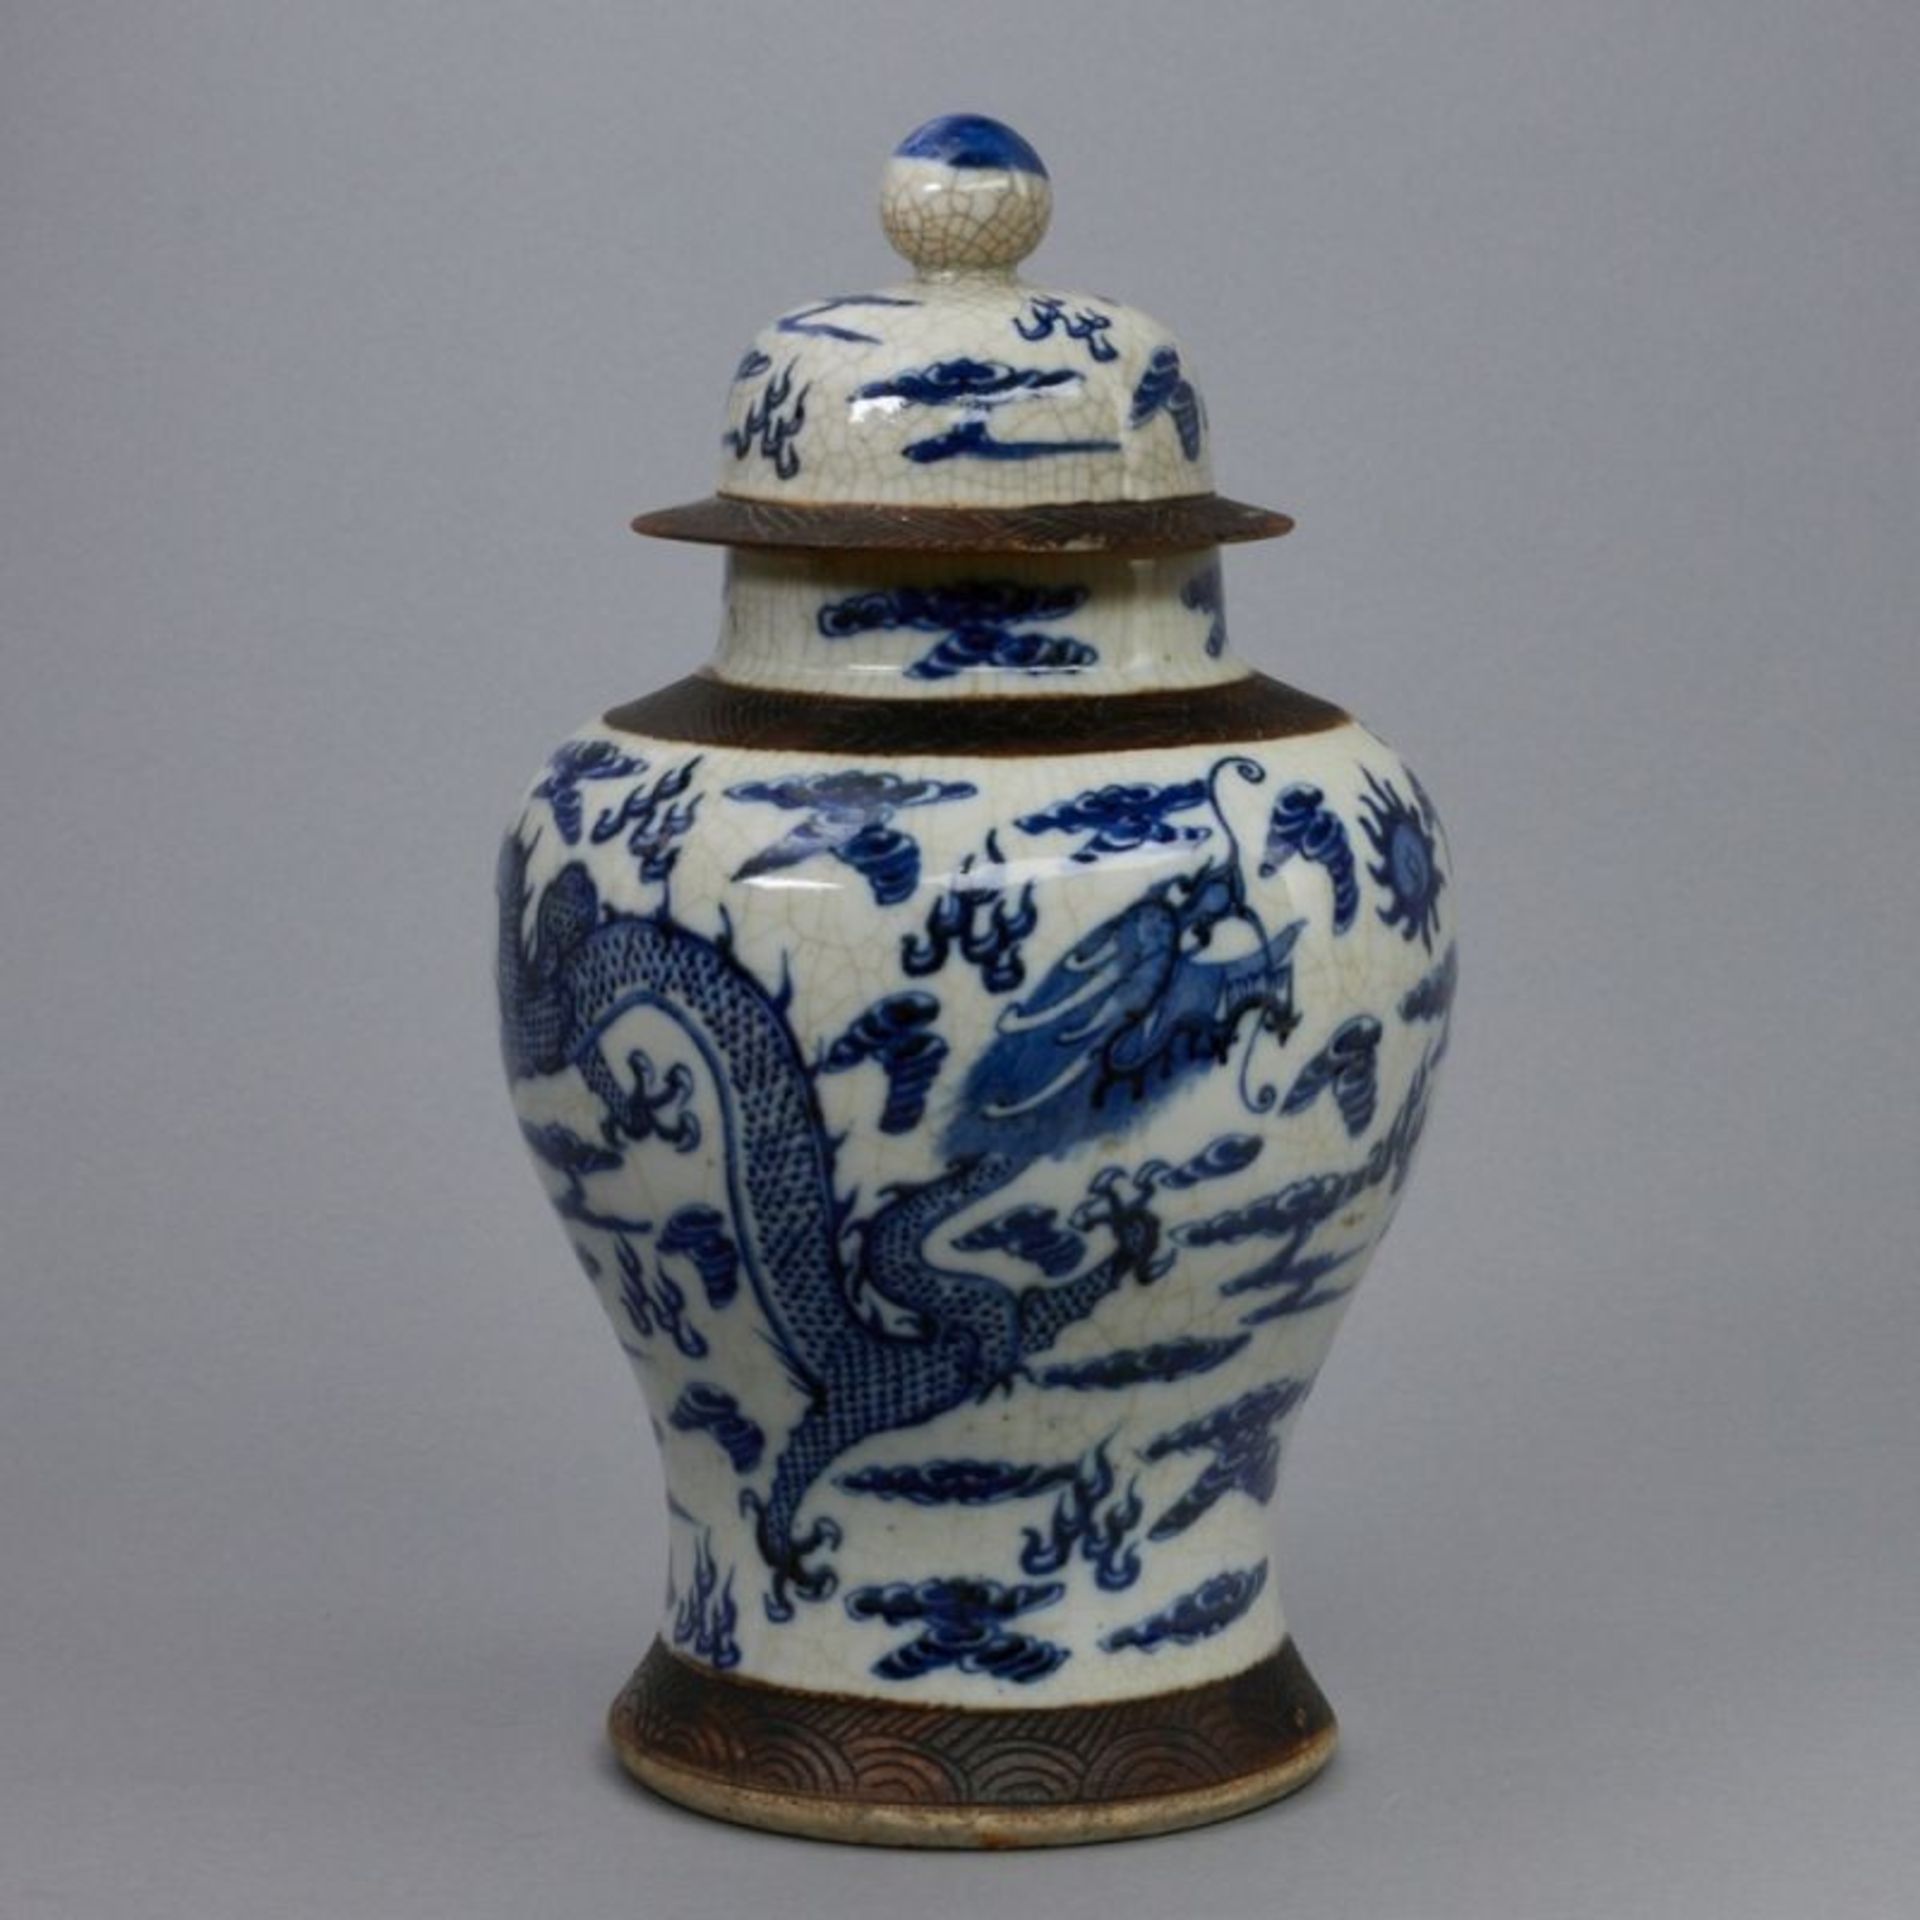 Deckelvase, China, Qing Dynastie, um 1800